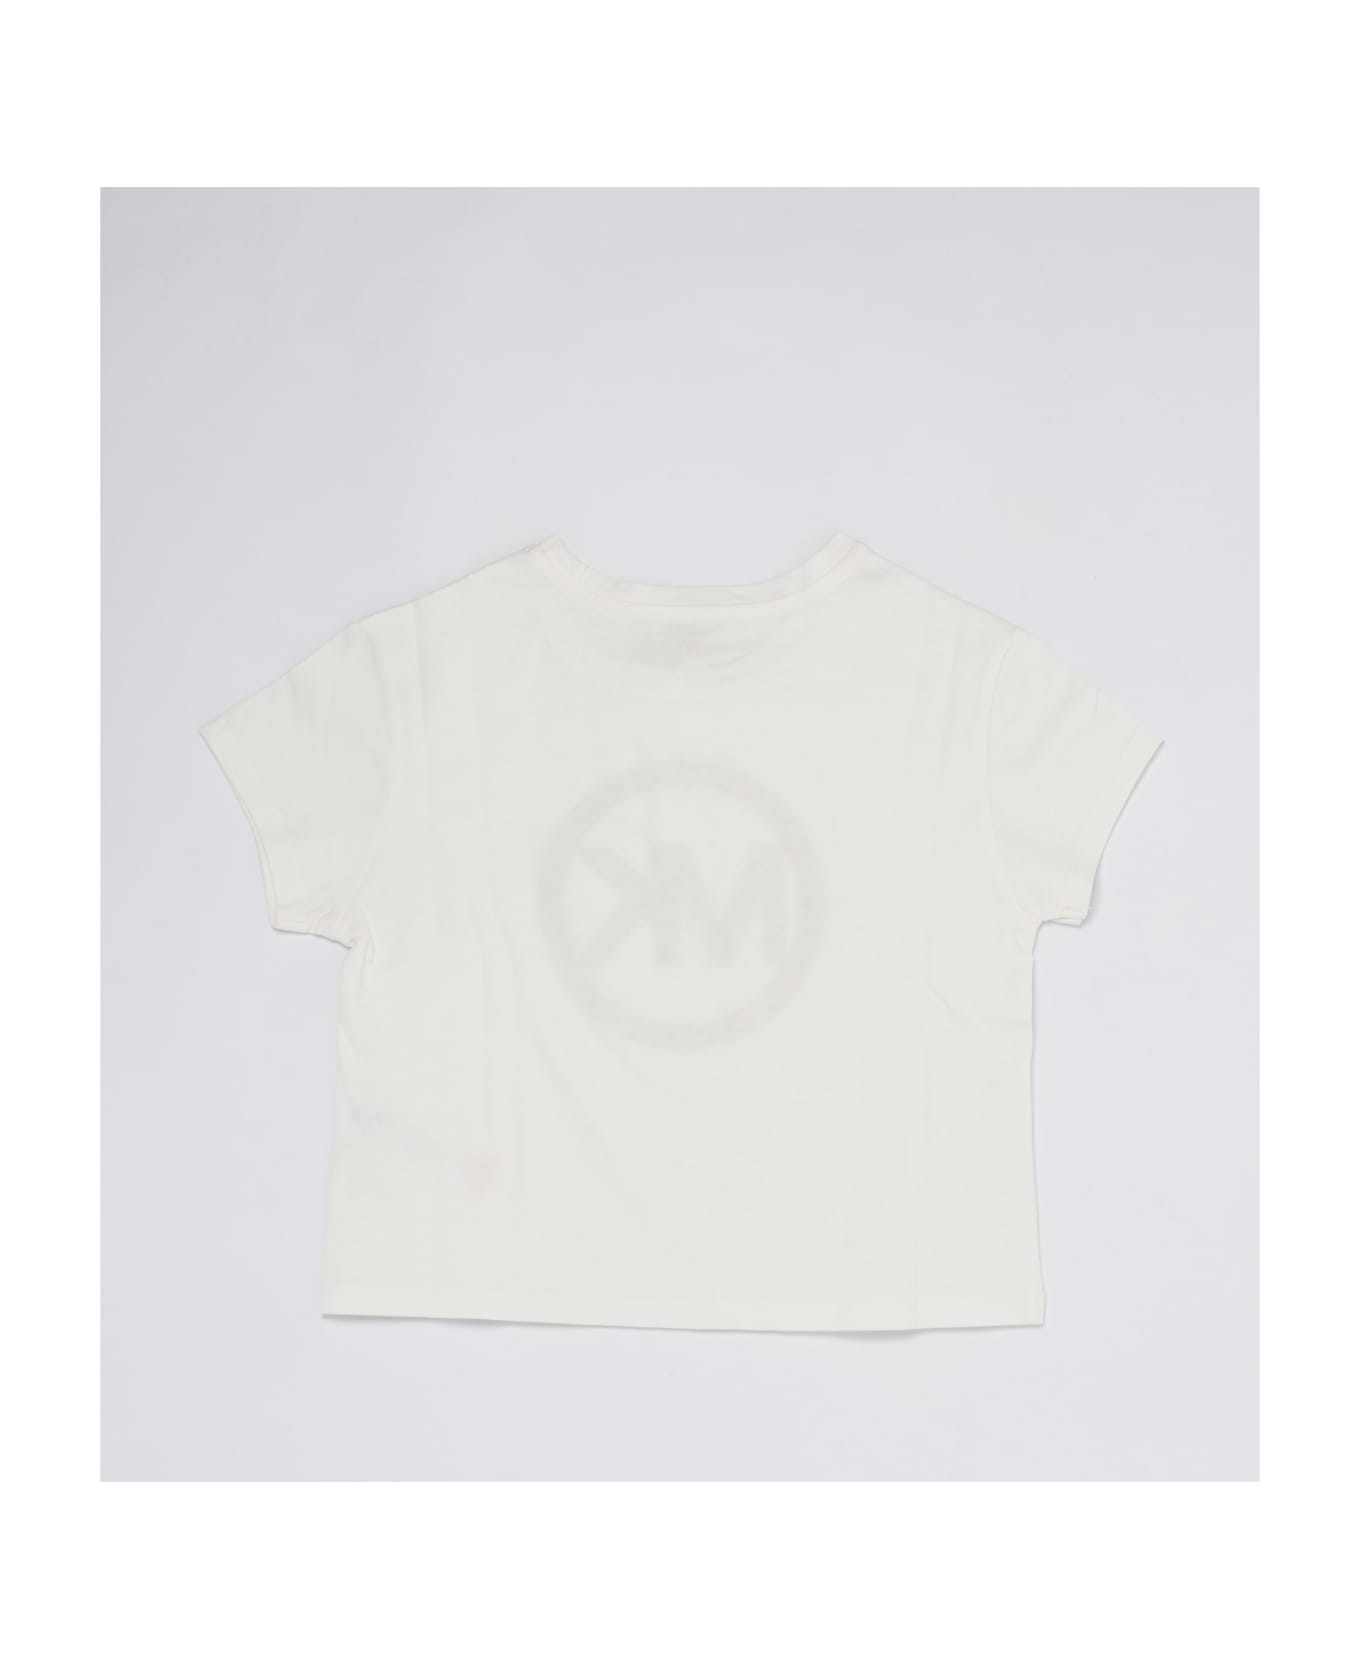 Michael Kors T-shirt T-shirt - BIANCO SPORCO